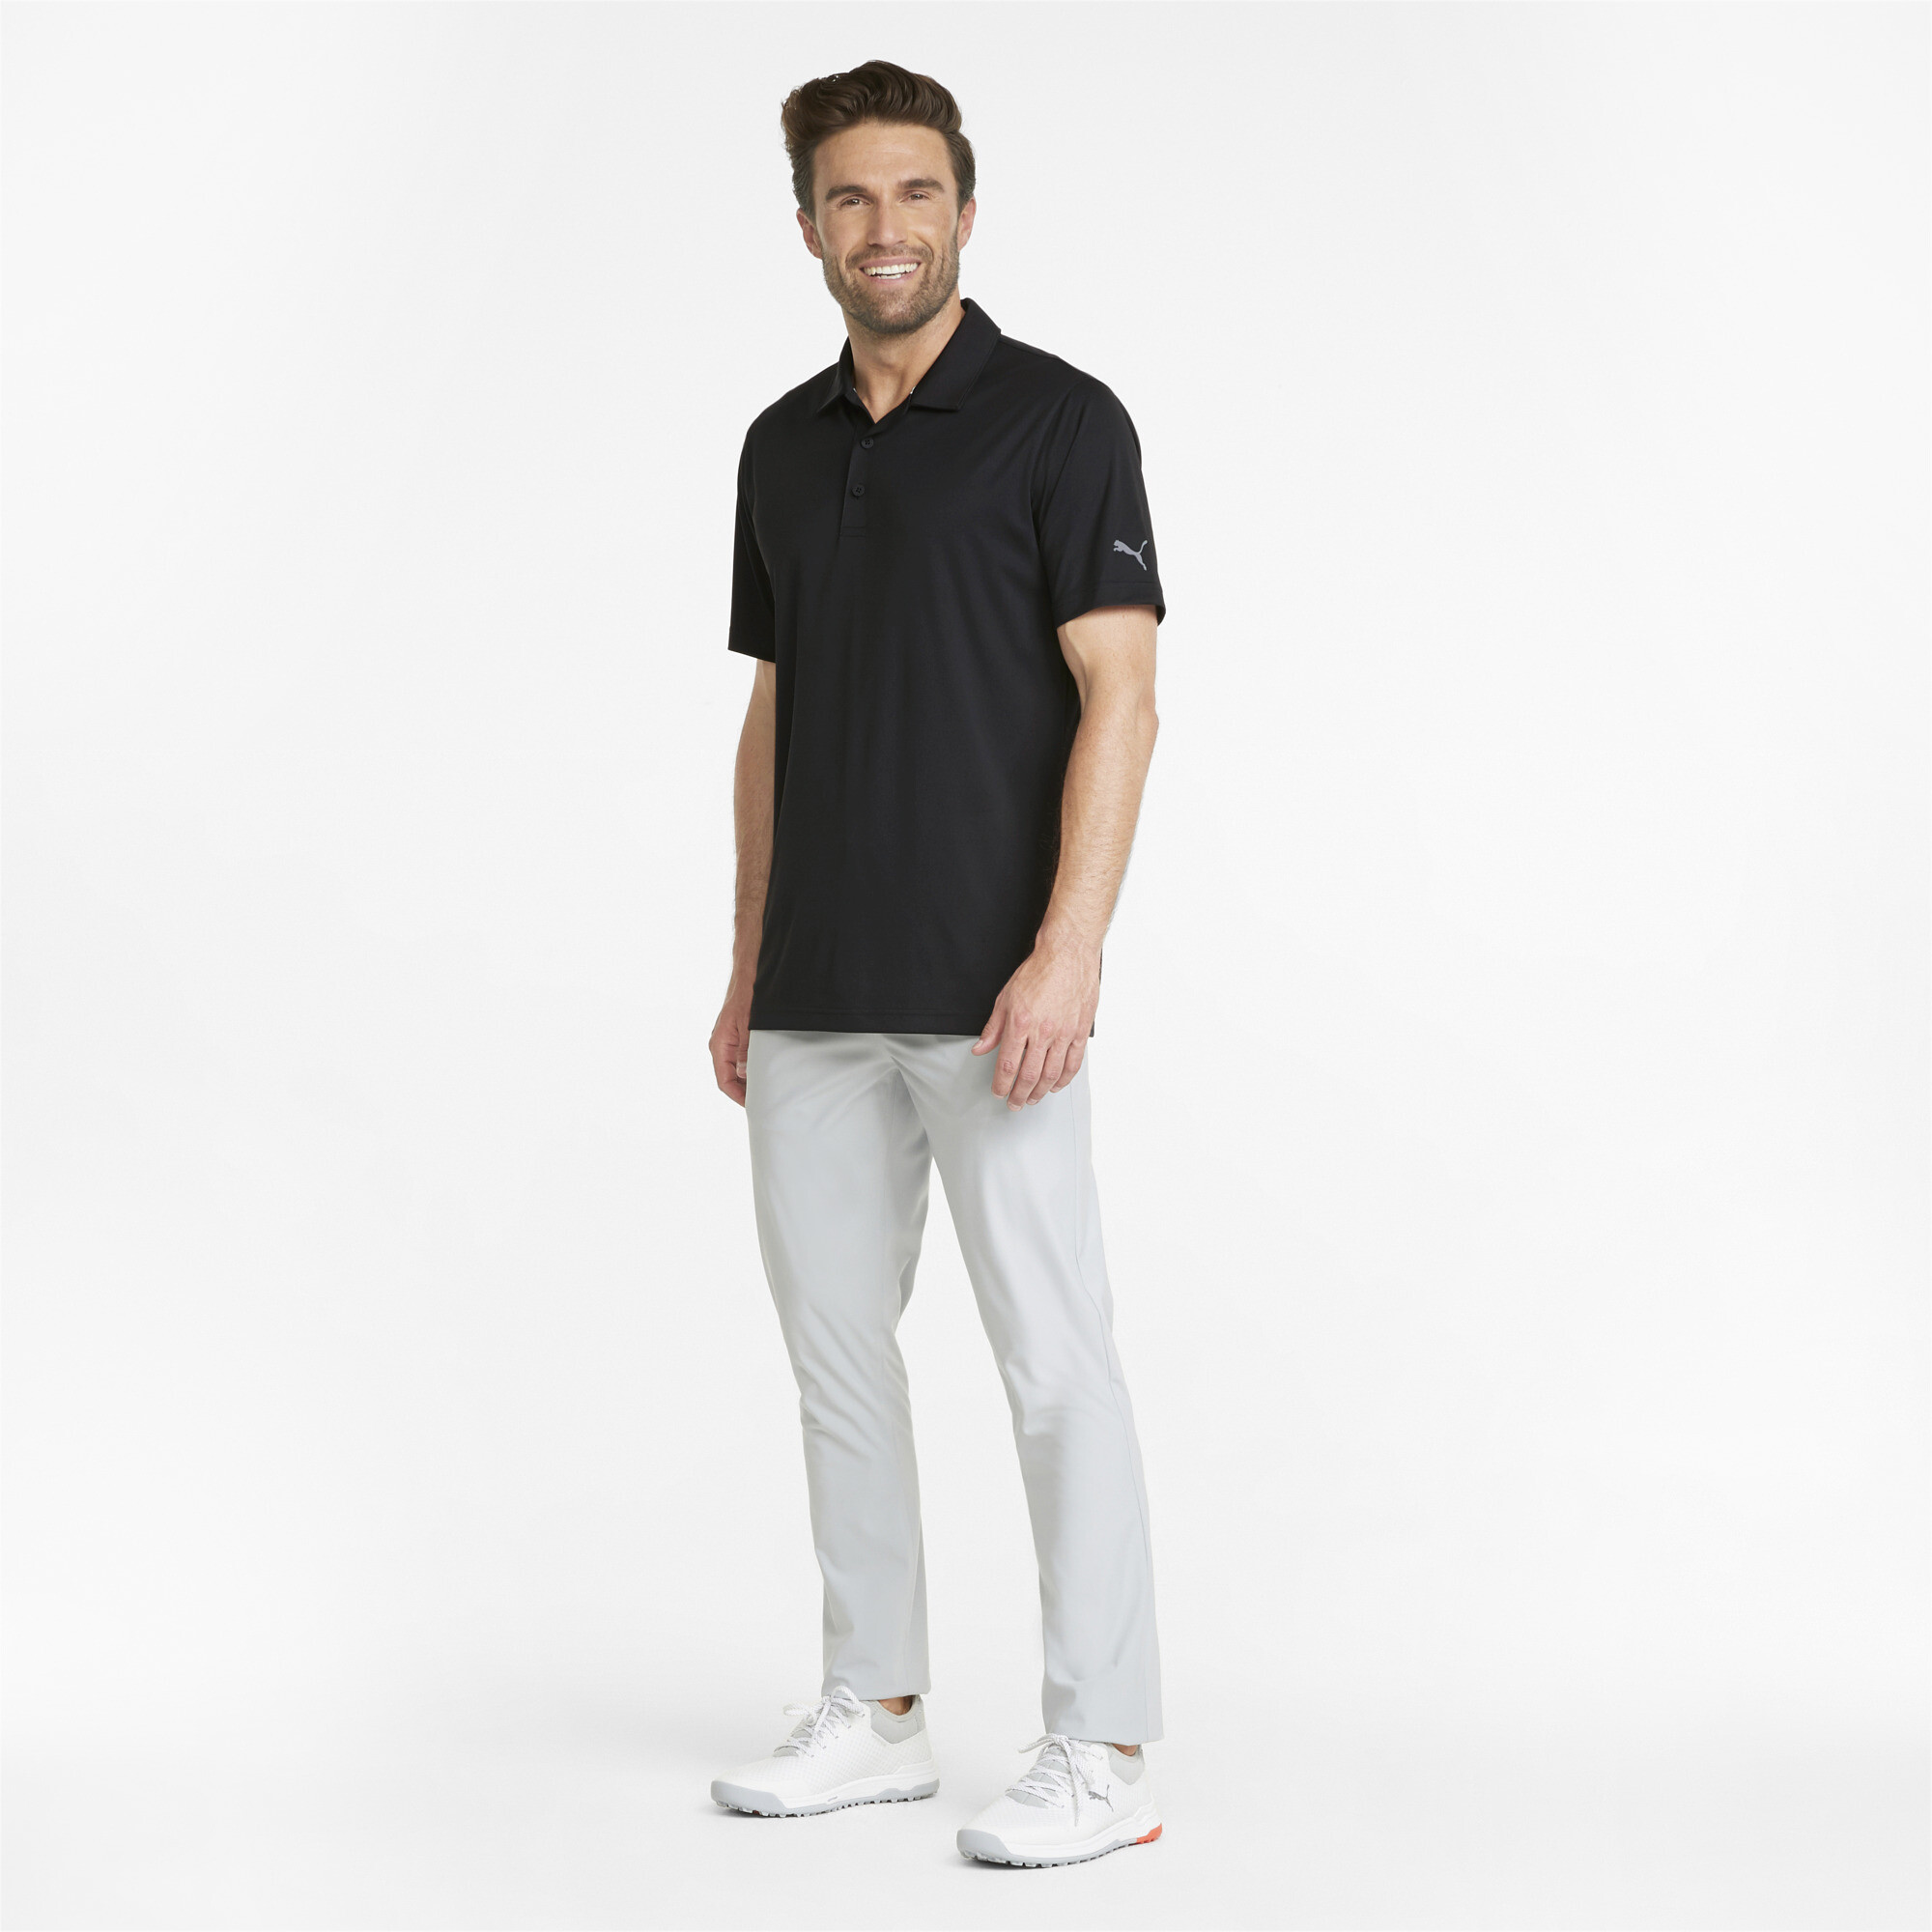 Men's Puma Gamer's Golf Polo Shirt T-Shirt, Black T-Shirt, Size 4XL T-Shirt, Clothing